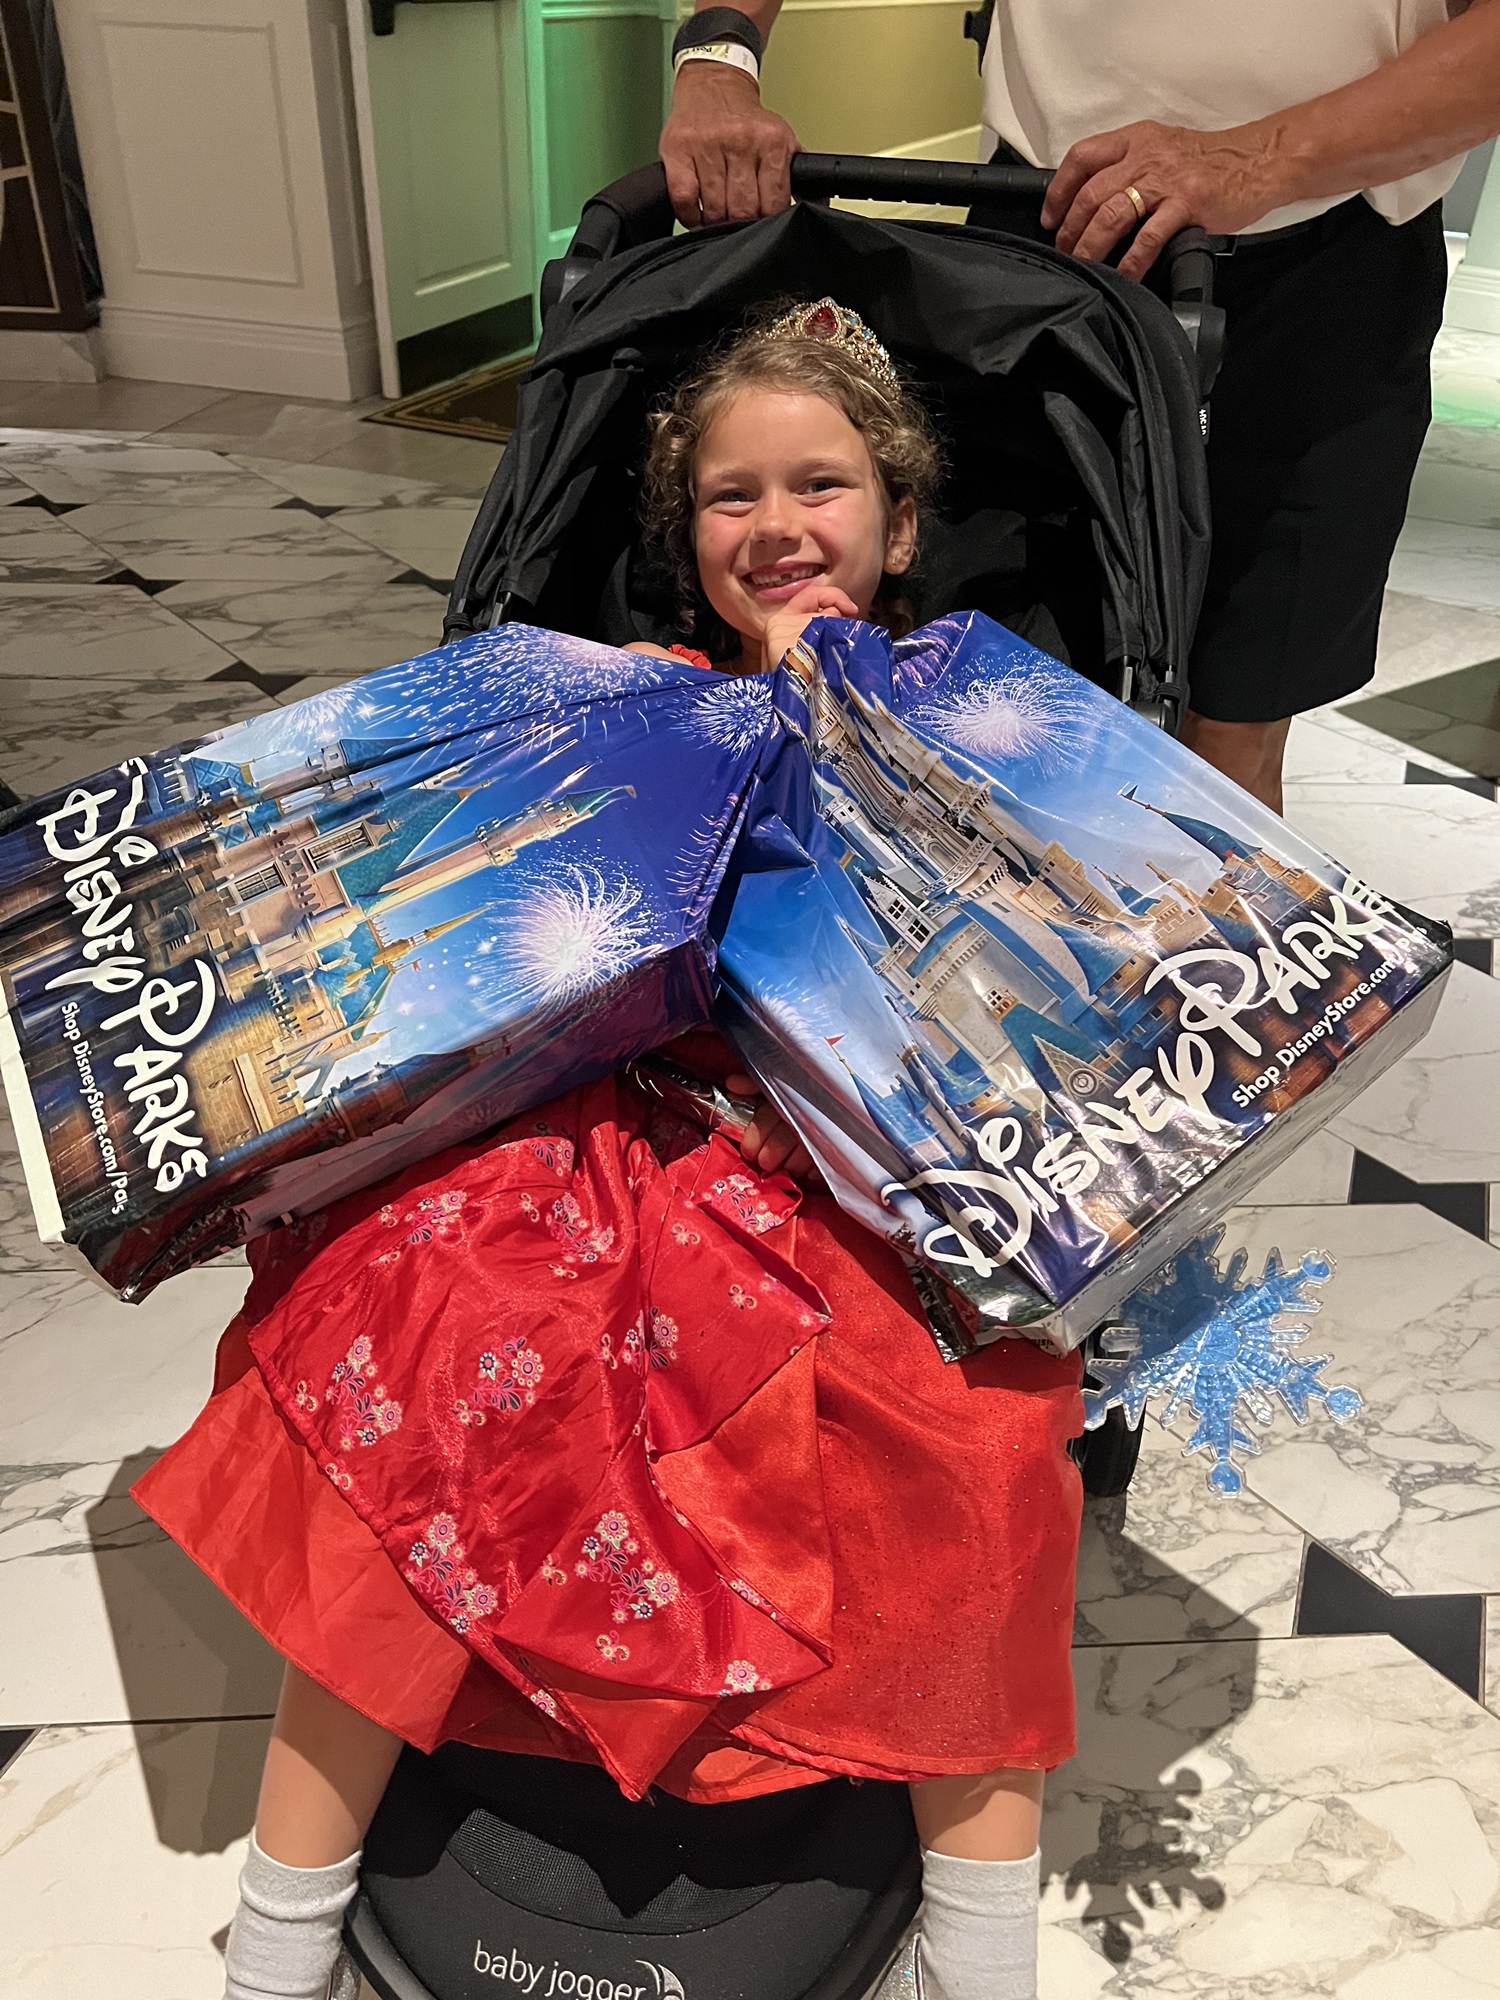 Child holding souvenirs in Disney World